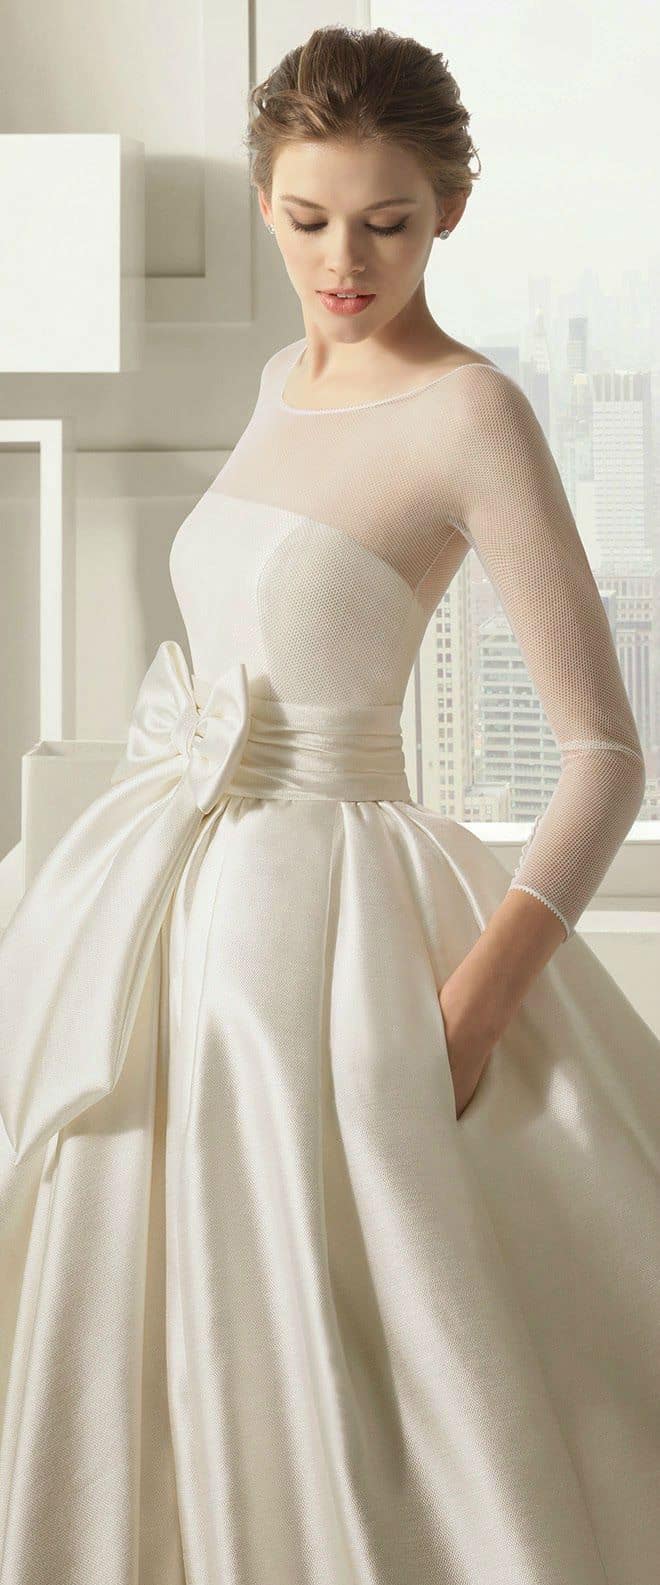 long-sleeve-wedding-dress08